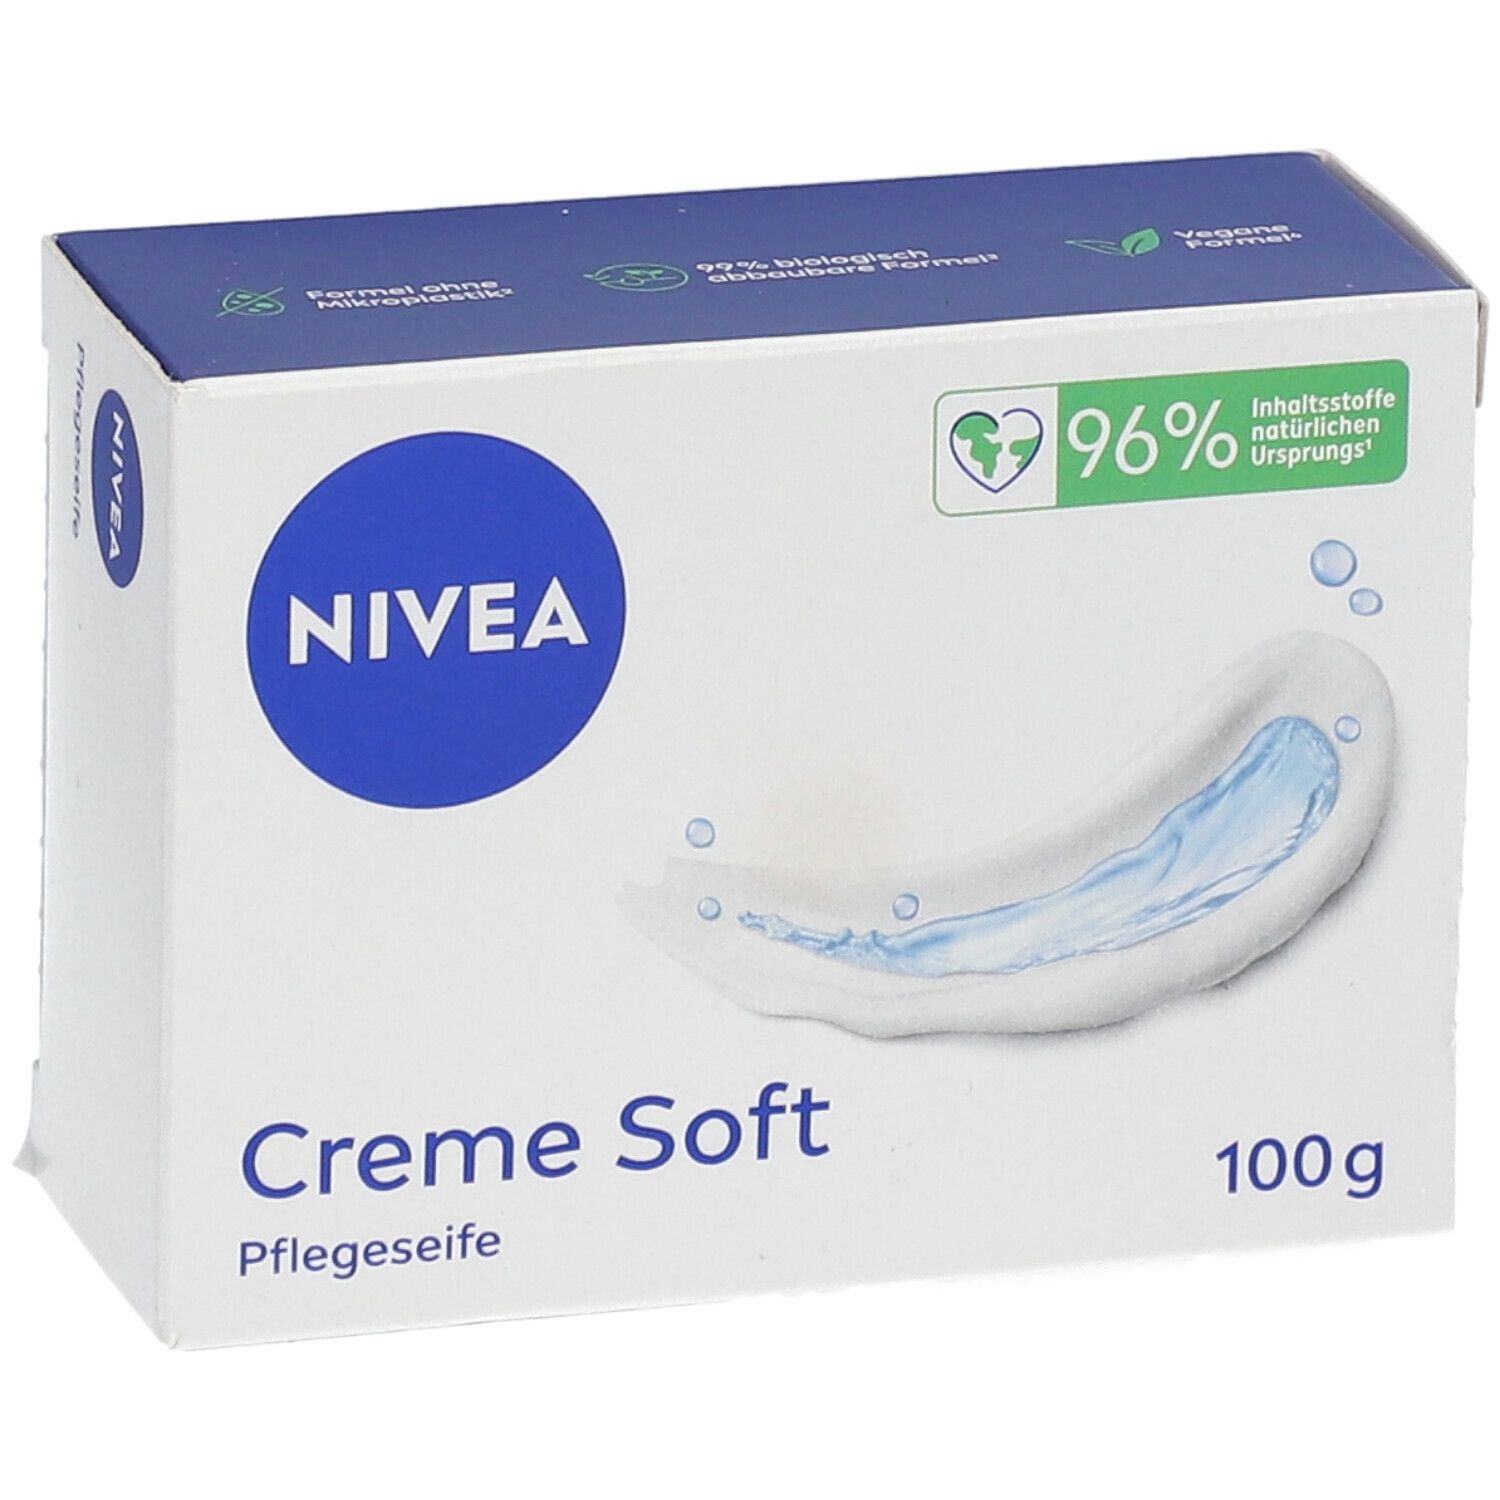 NIVEA® creme soft Cremeseife